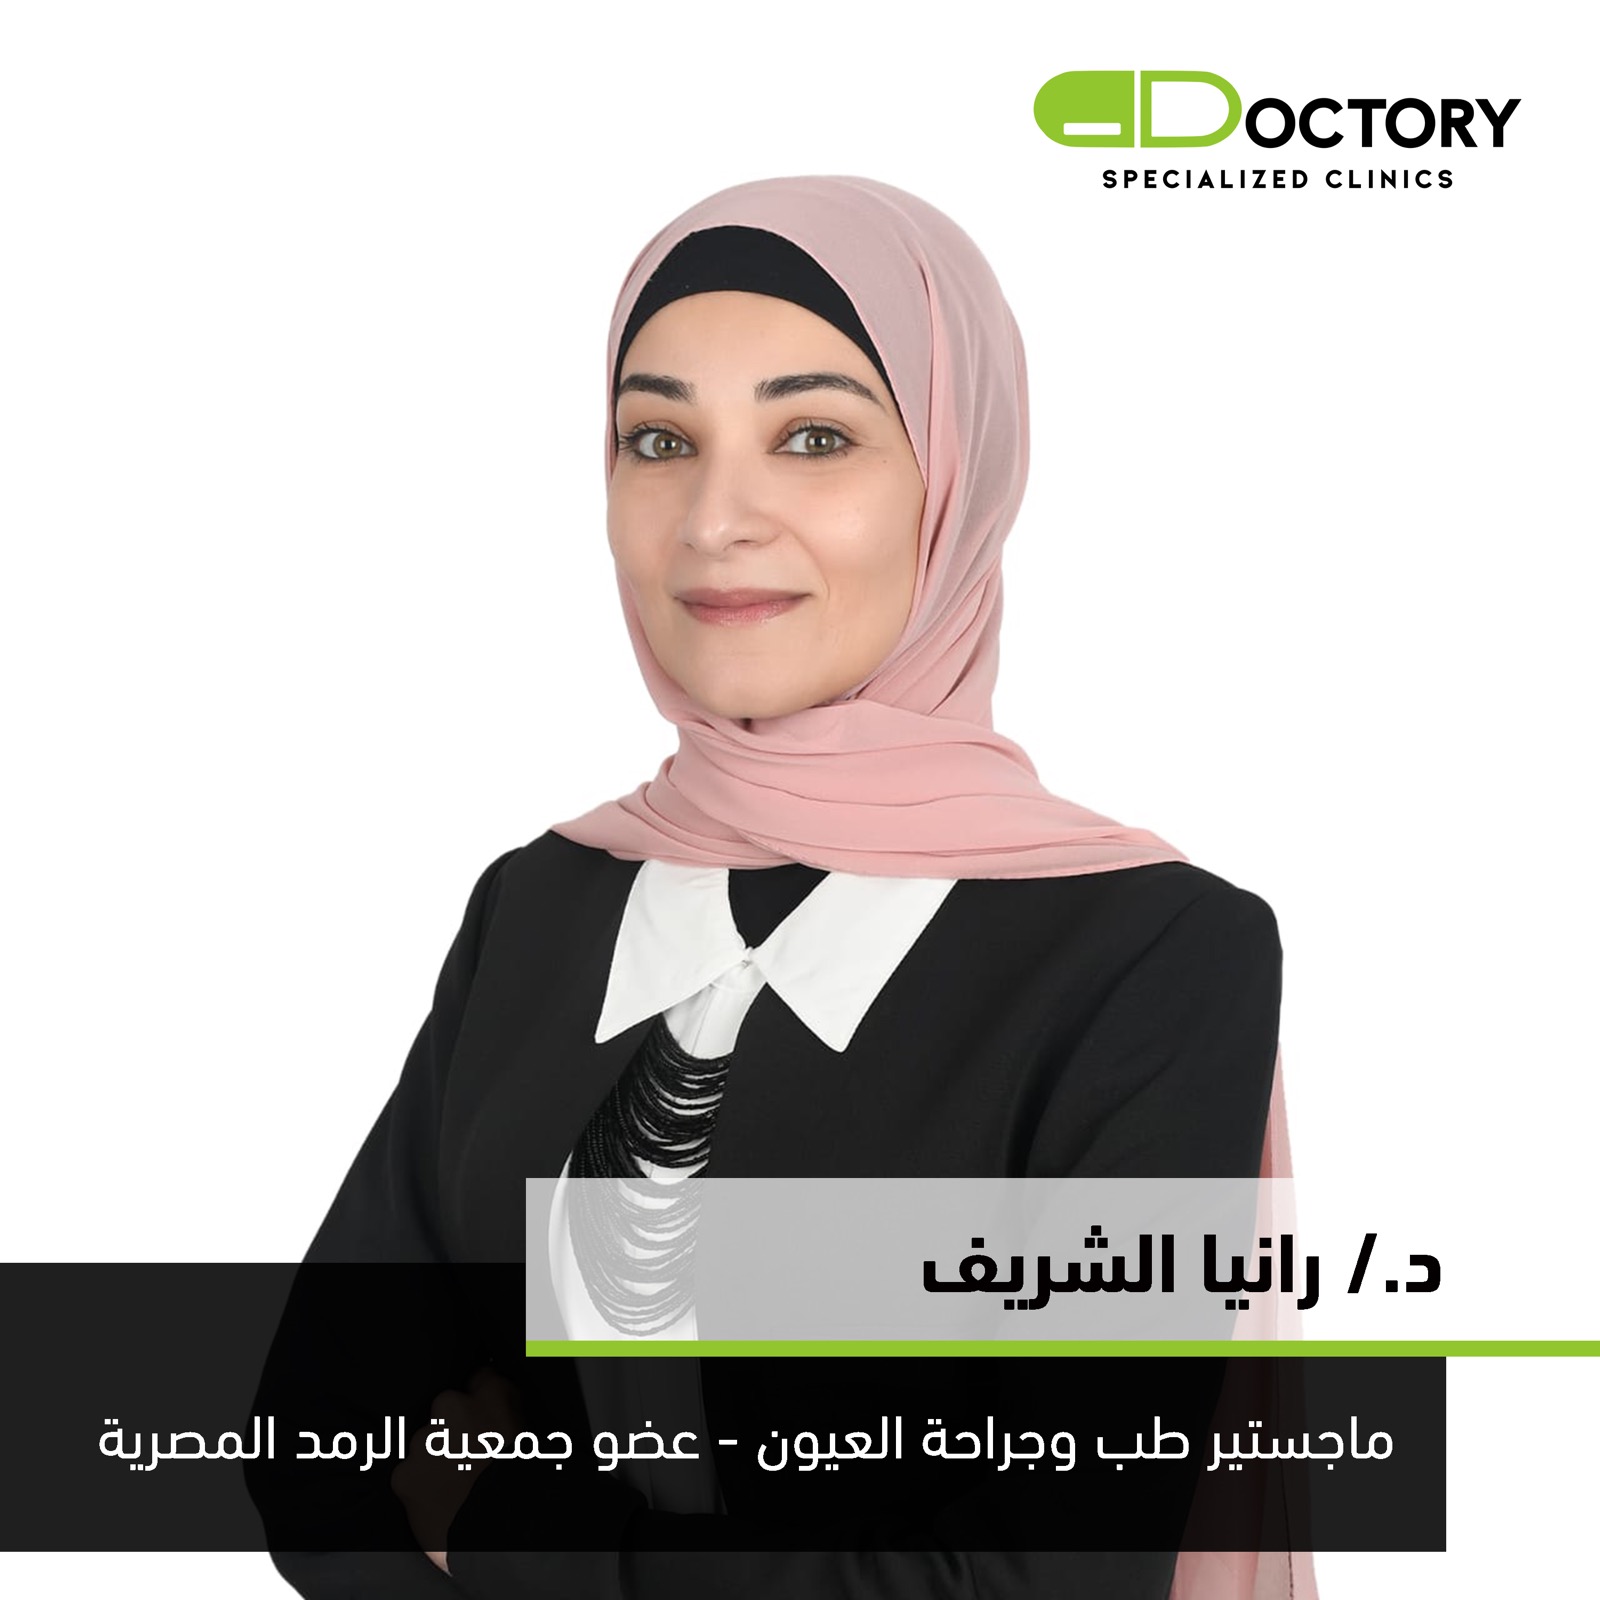 Dr. Rania farahat